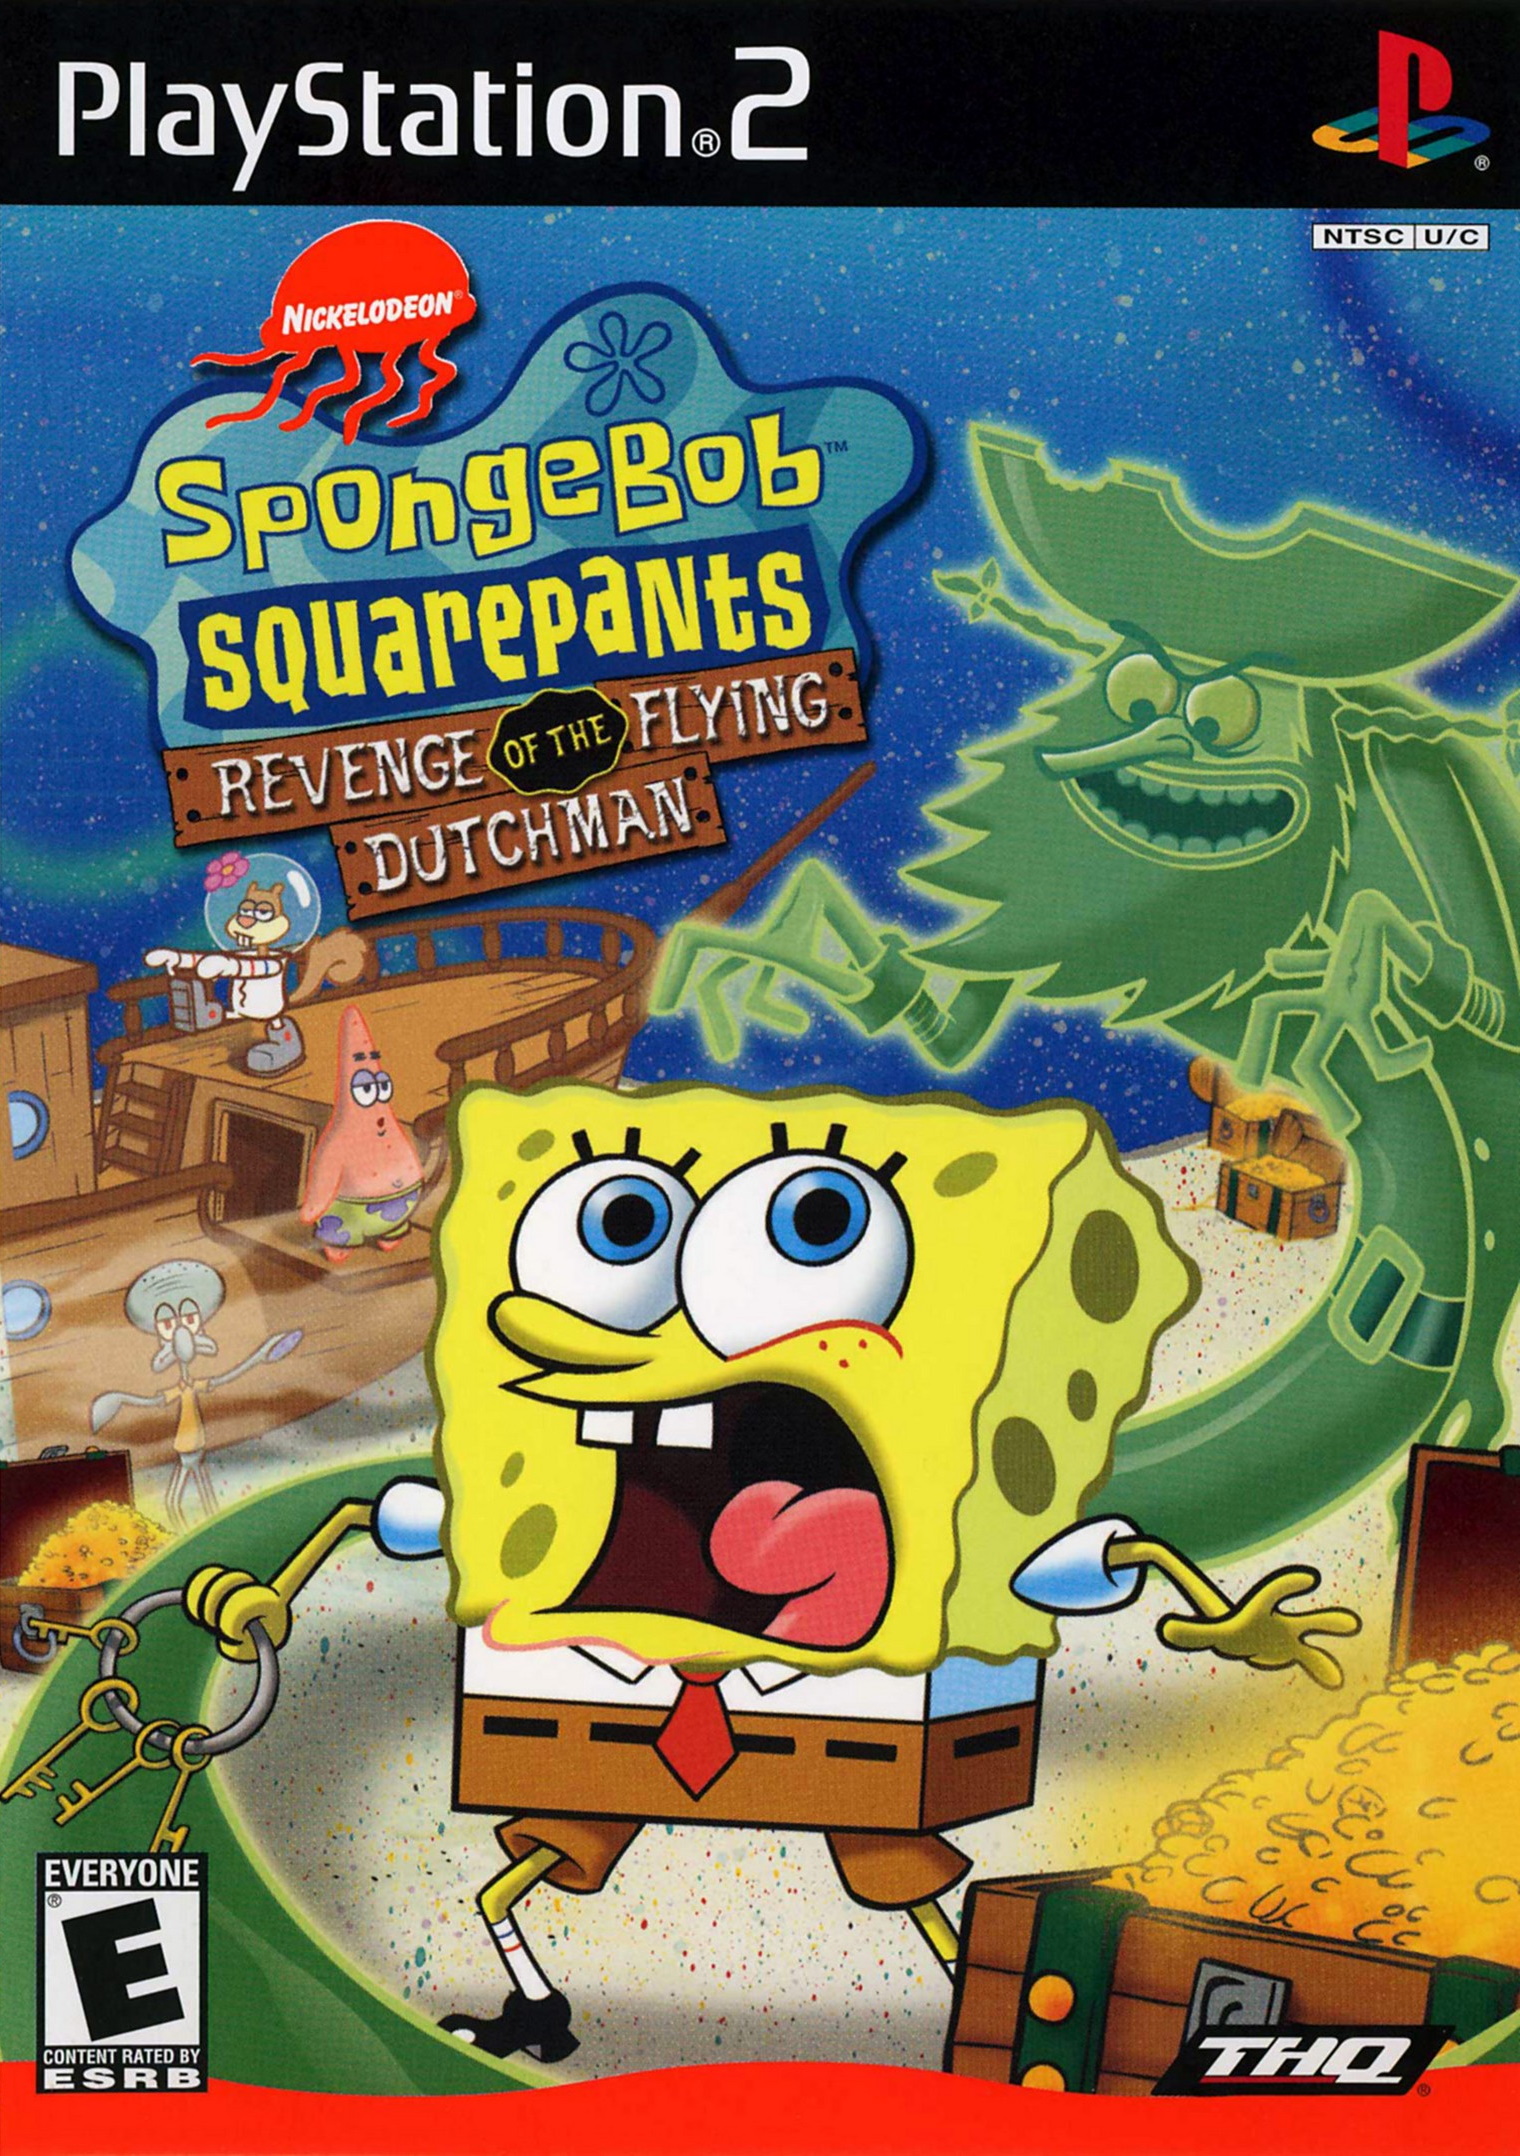 The spongebob squarepants movie watchcartoononline